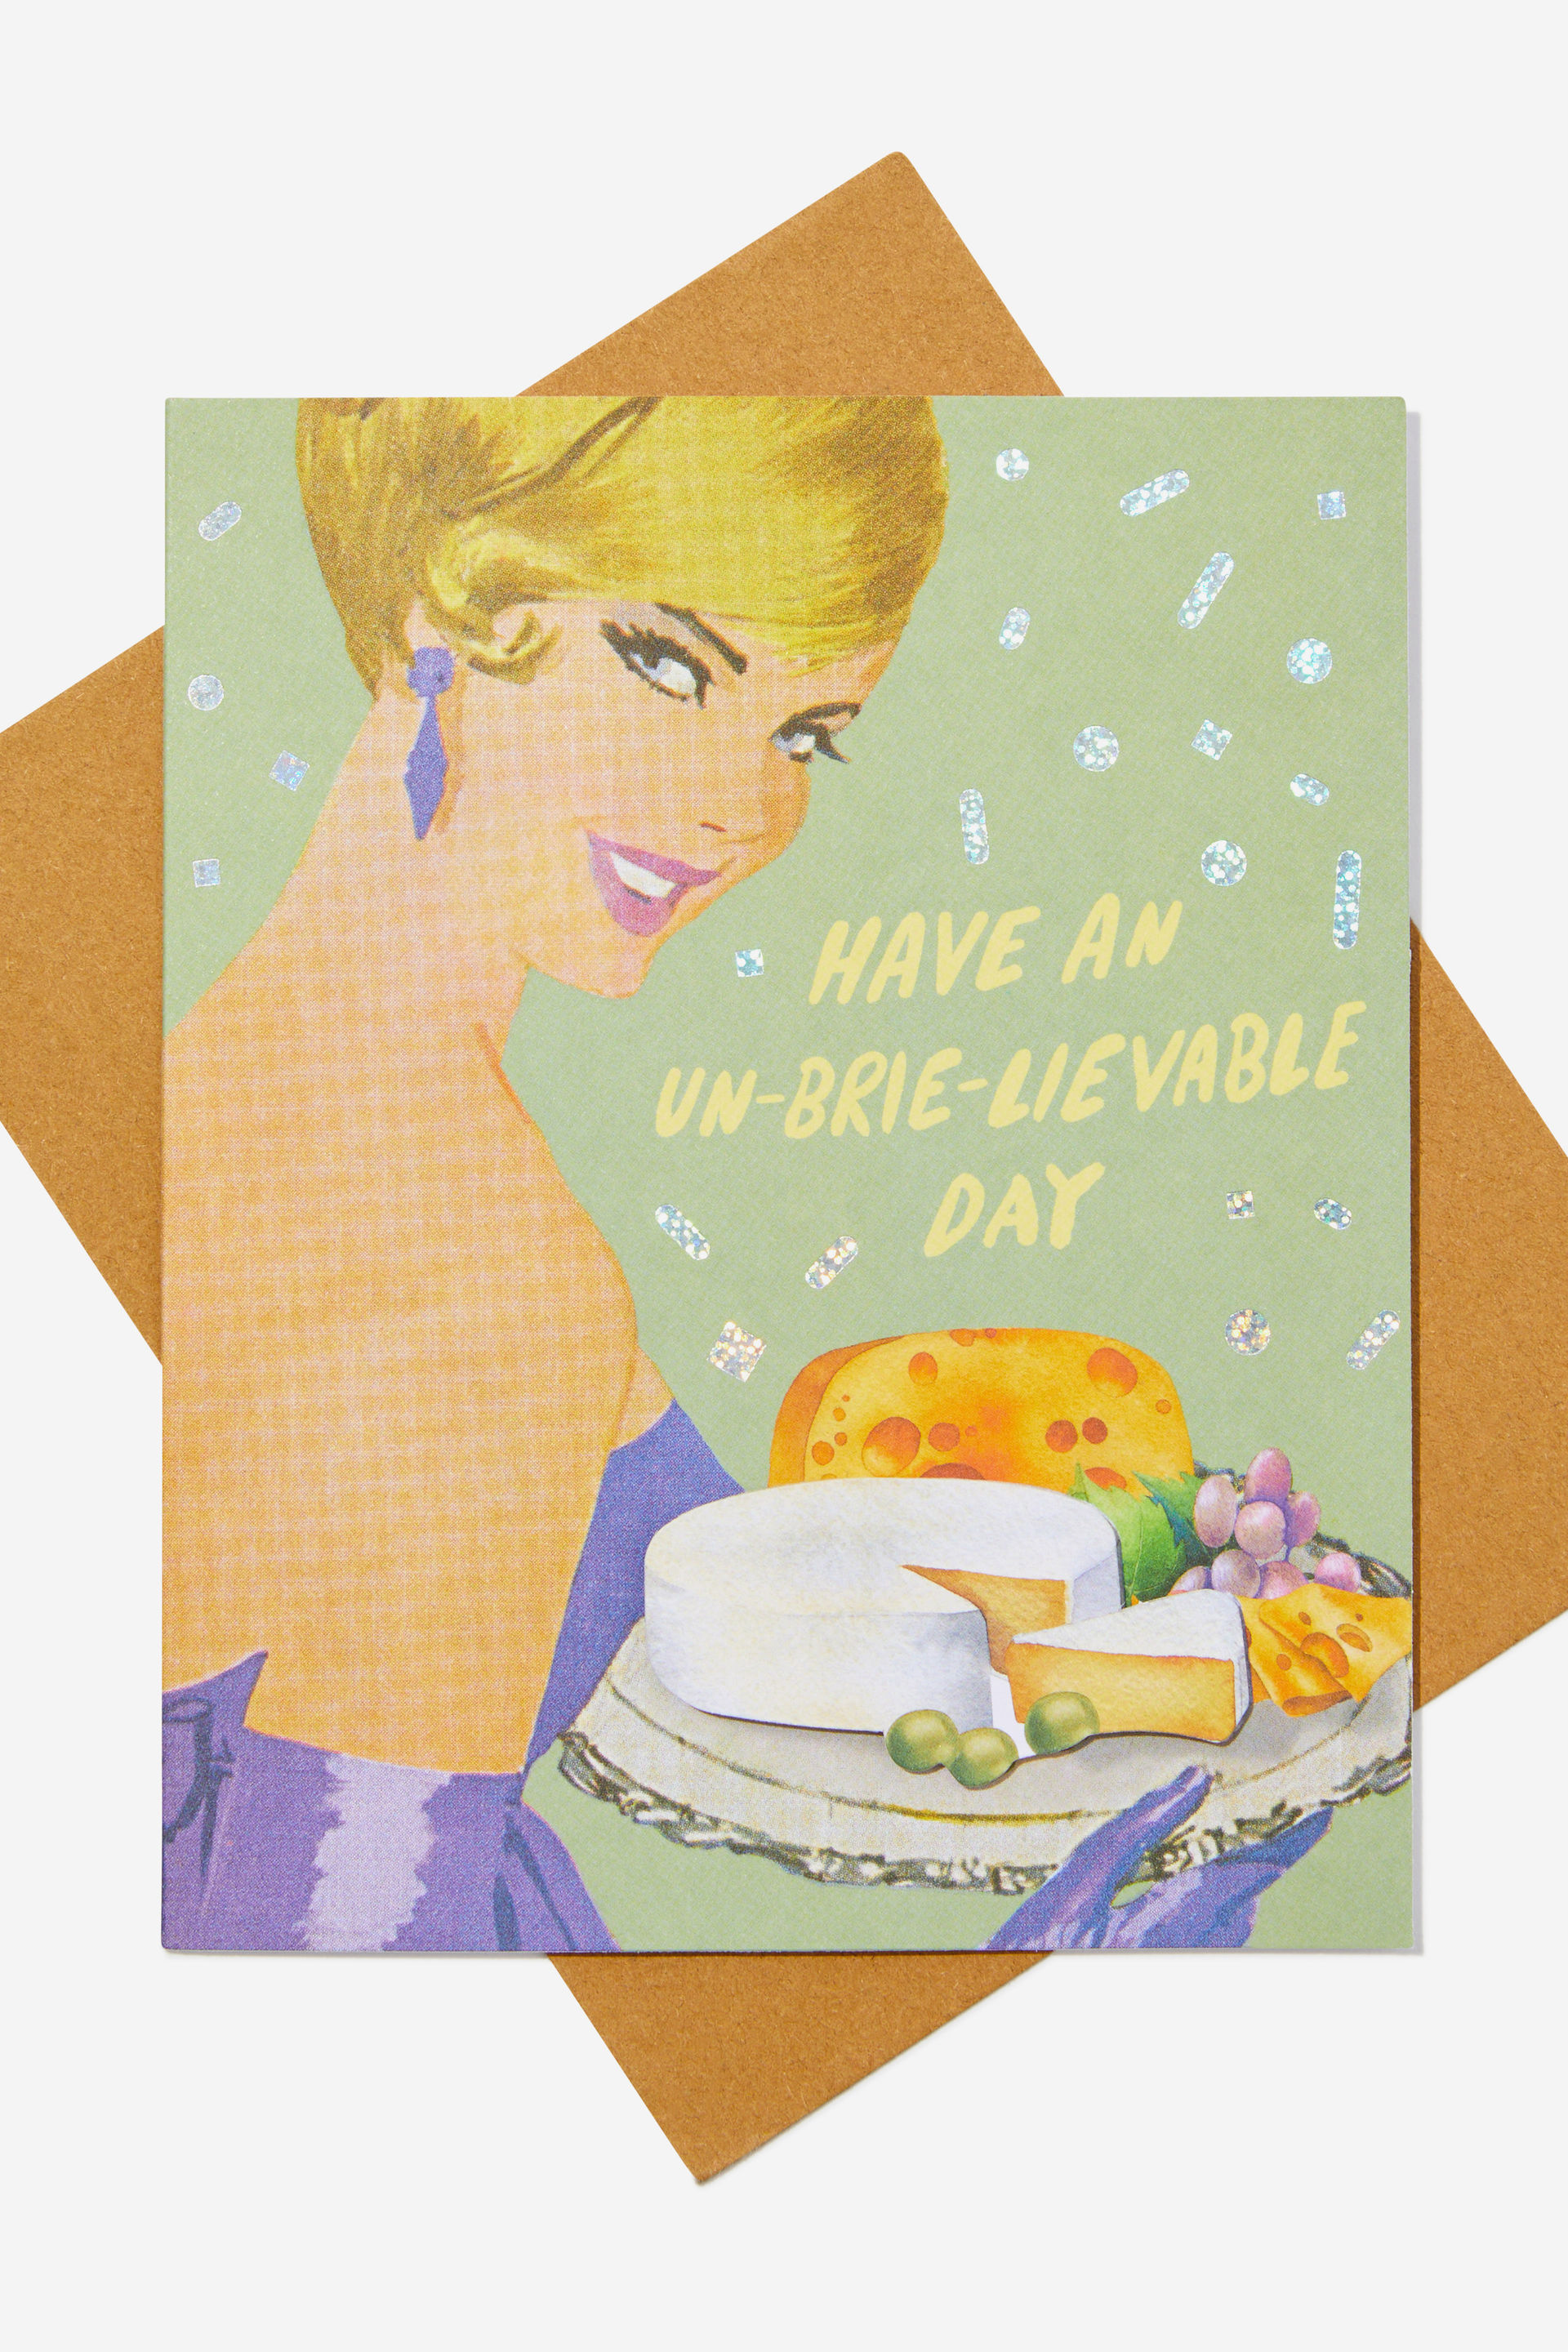 Typo - Premium Nice Birthday Card - Unbrielievable day metallic